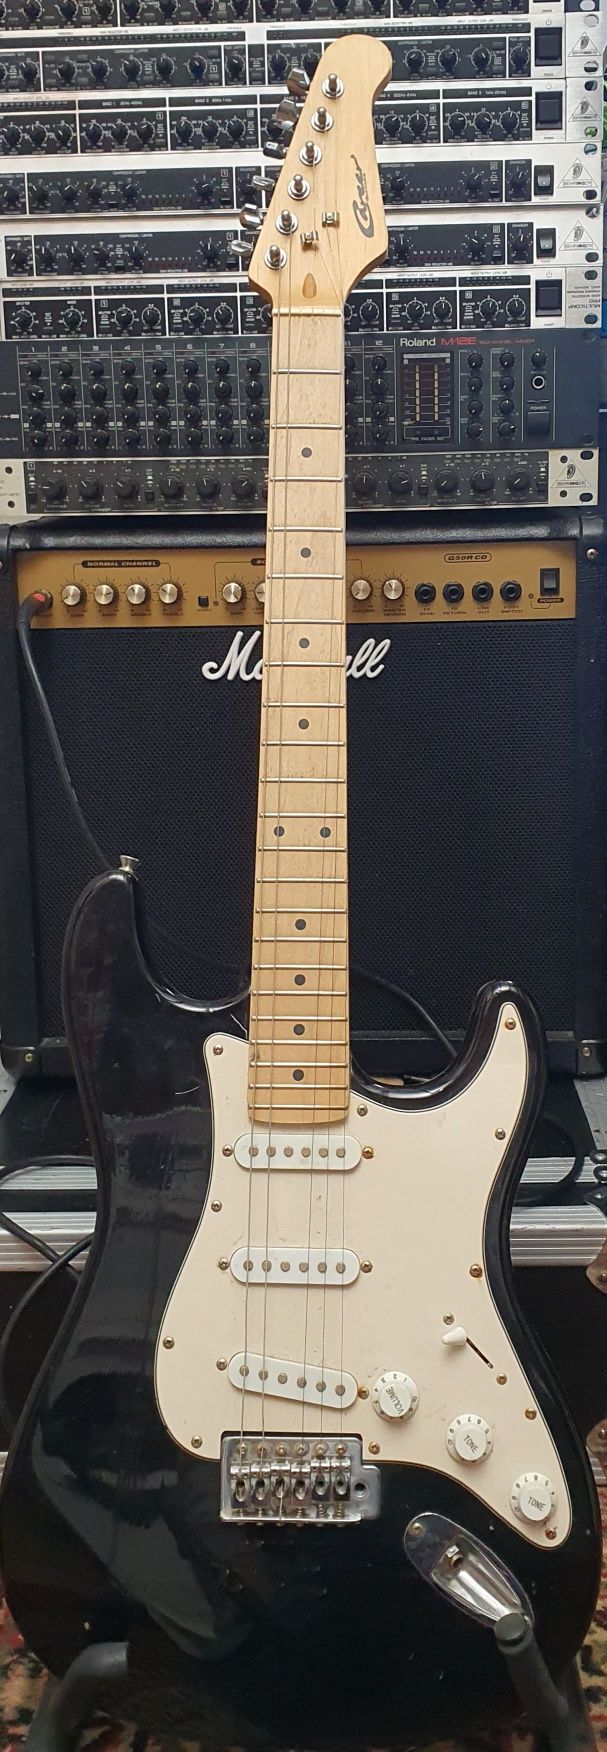 Gitara elektryczna Stratocaster czarna